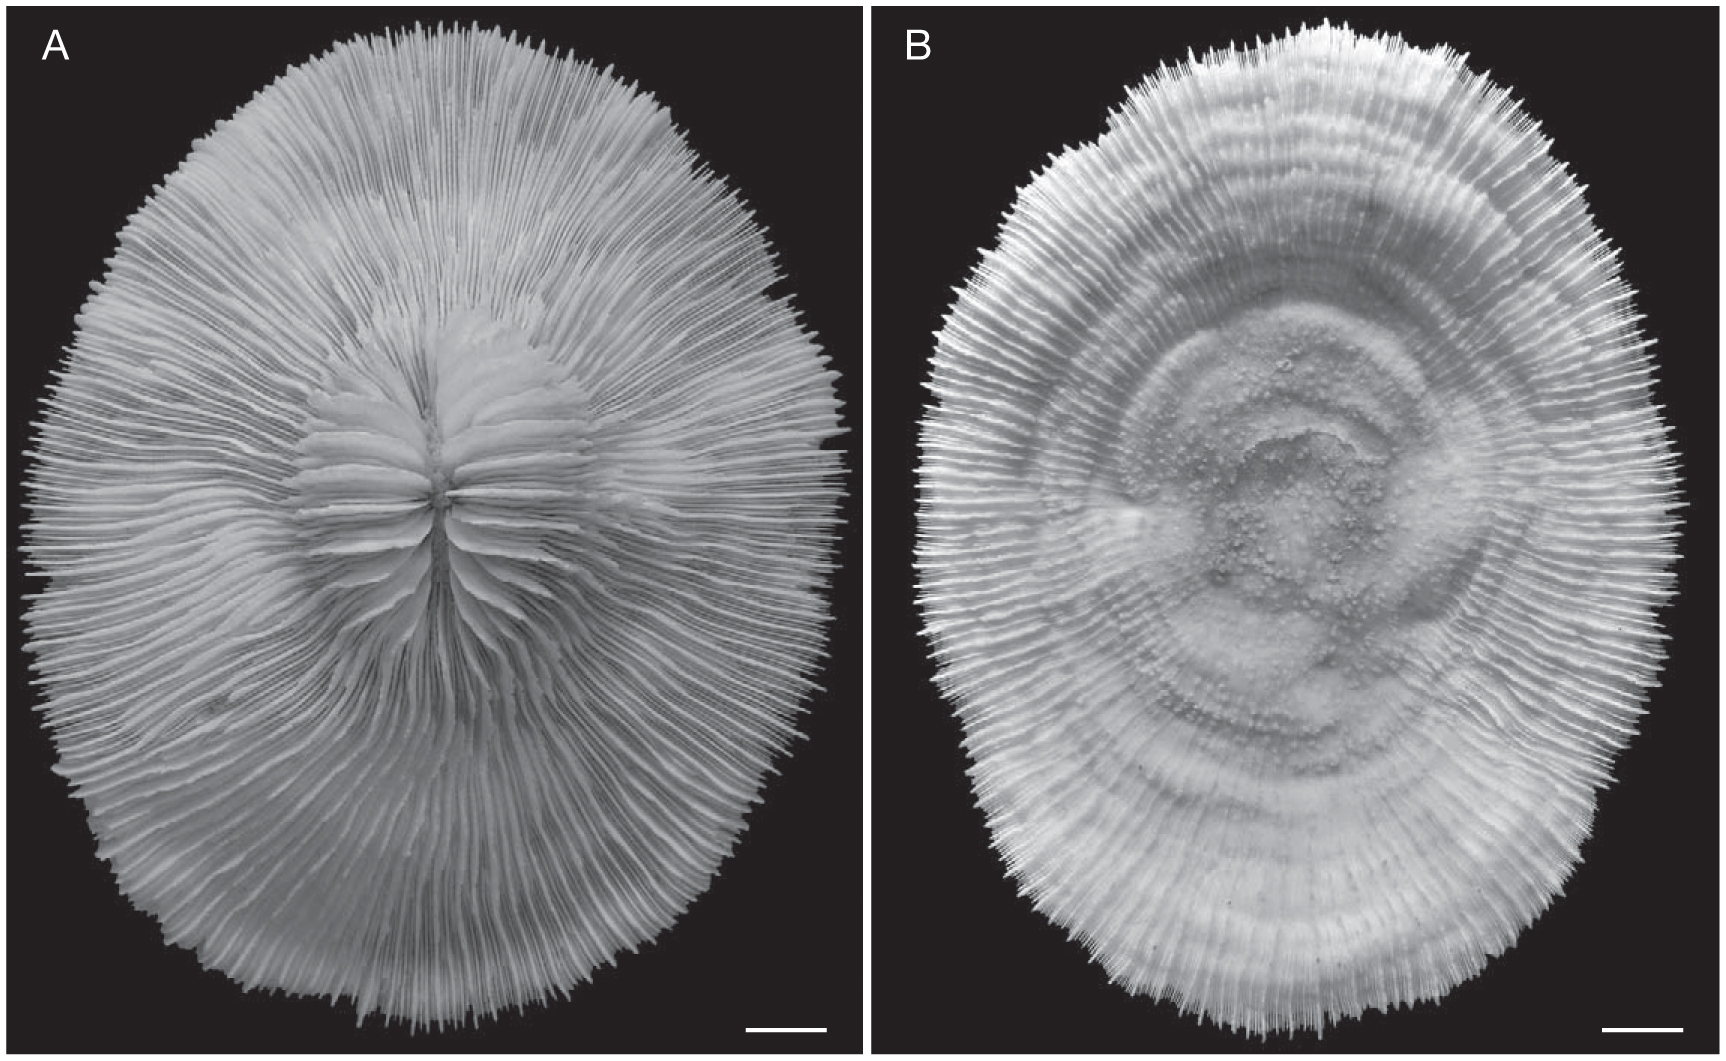 Coral-verdadeira (Micrurus  Download Scientific Diagram